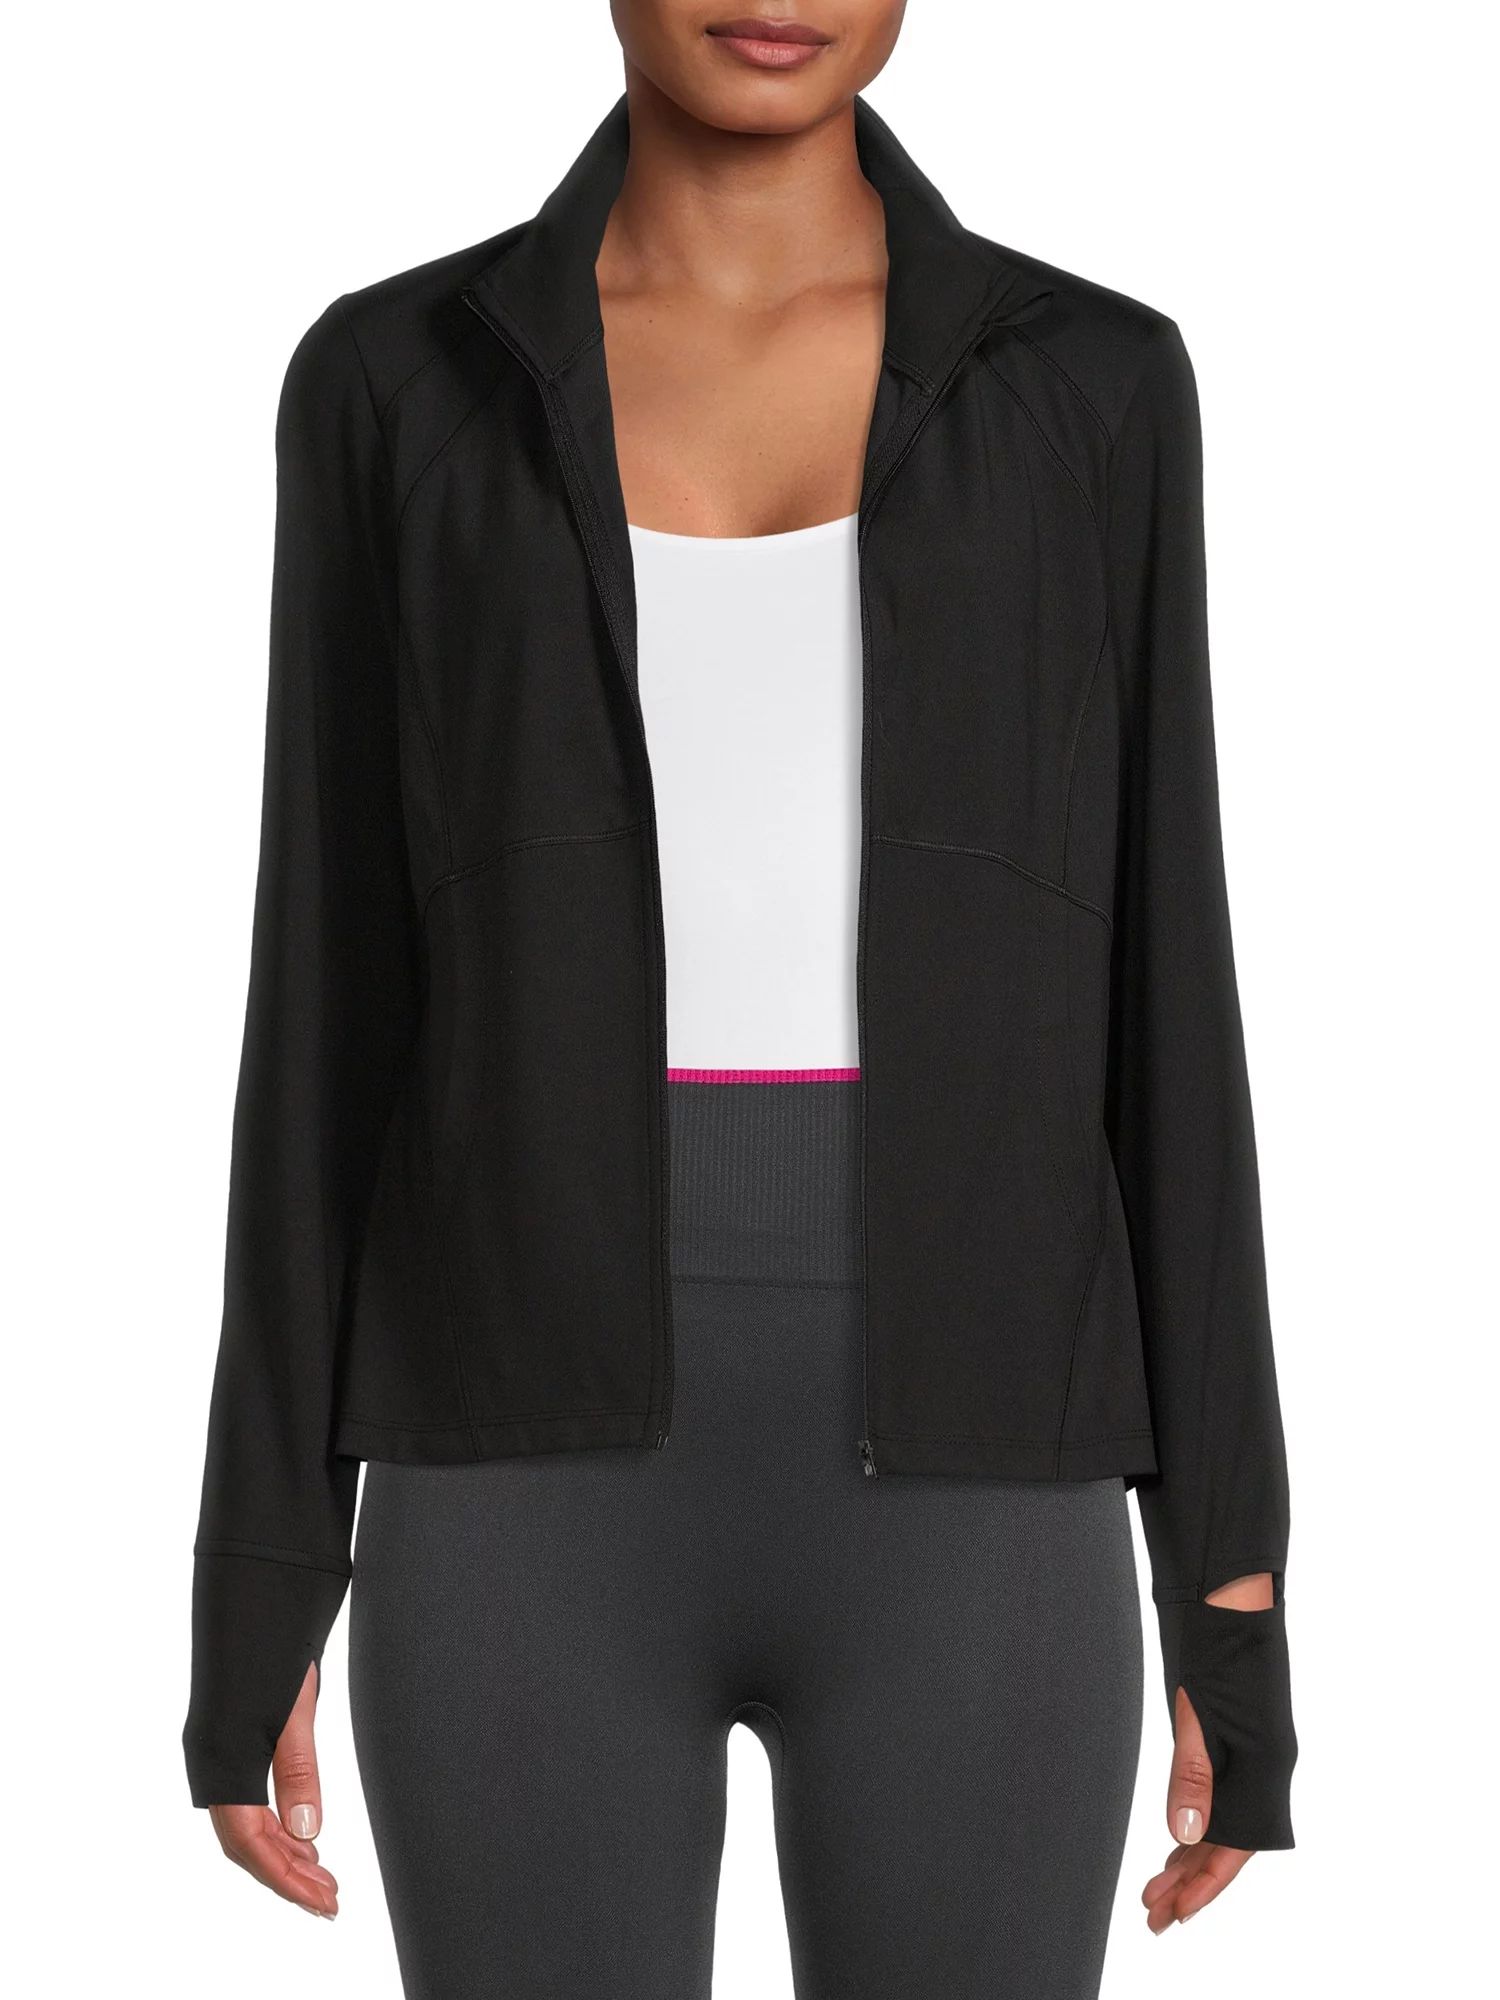 Avia Women's Active Full Zip Long Sleeve Jacket with Thumbholes and Sport Watch Opening | Walmart (US)